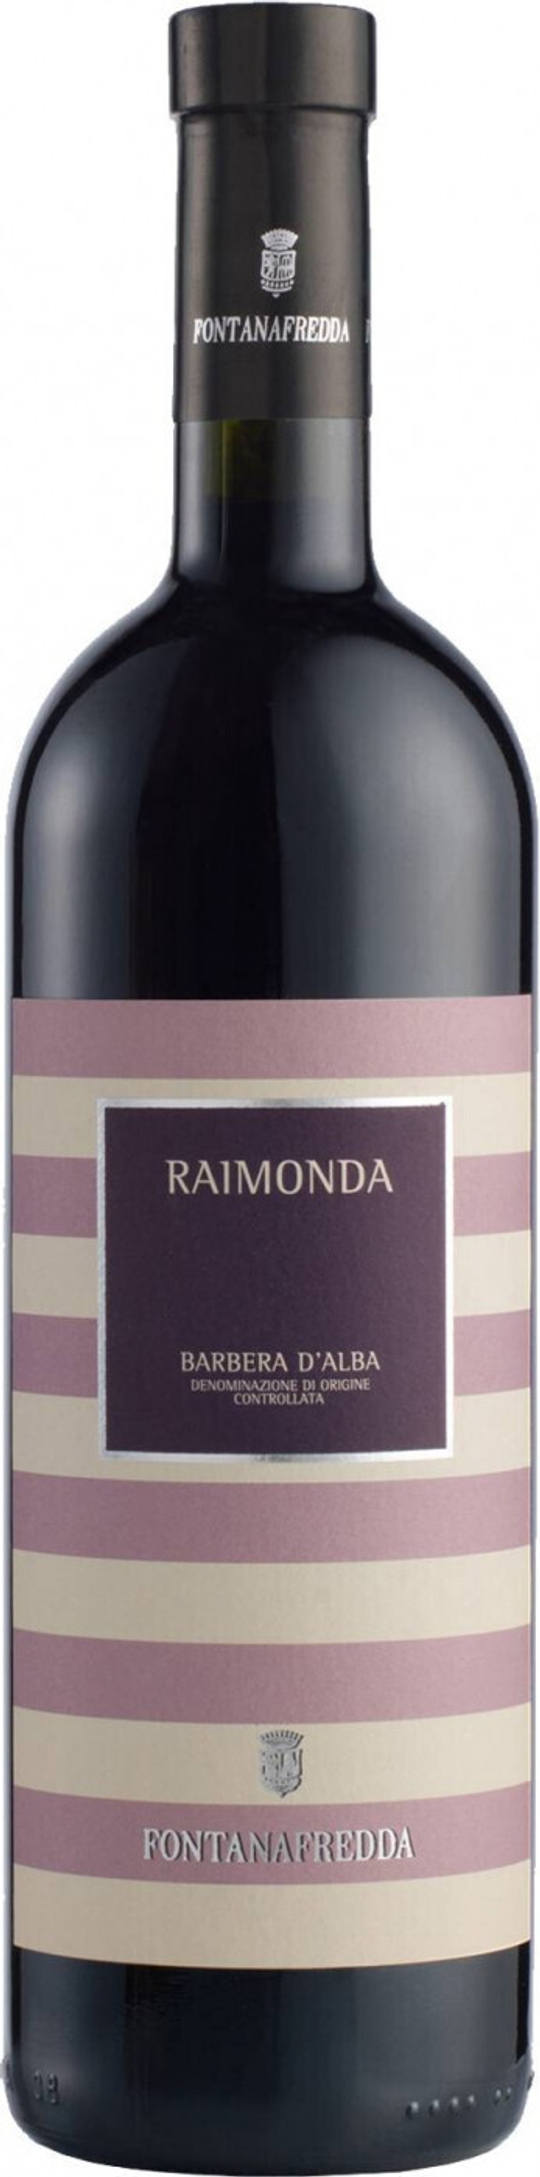 Вино Fontanafredda Barbera d’Alba Raimonda, 0,75 л.